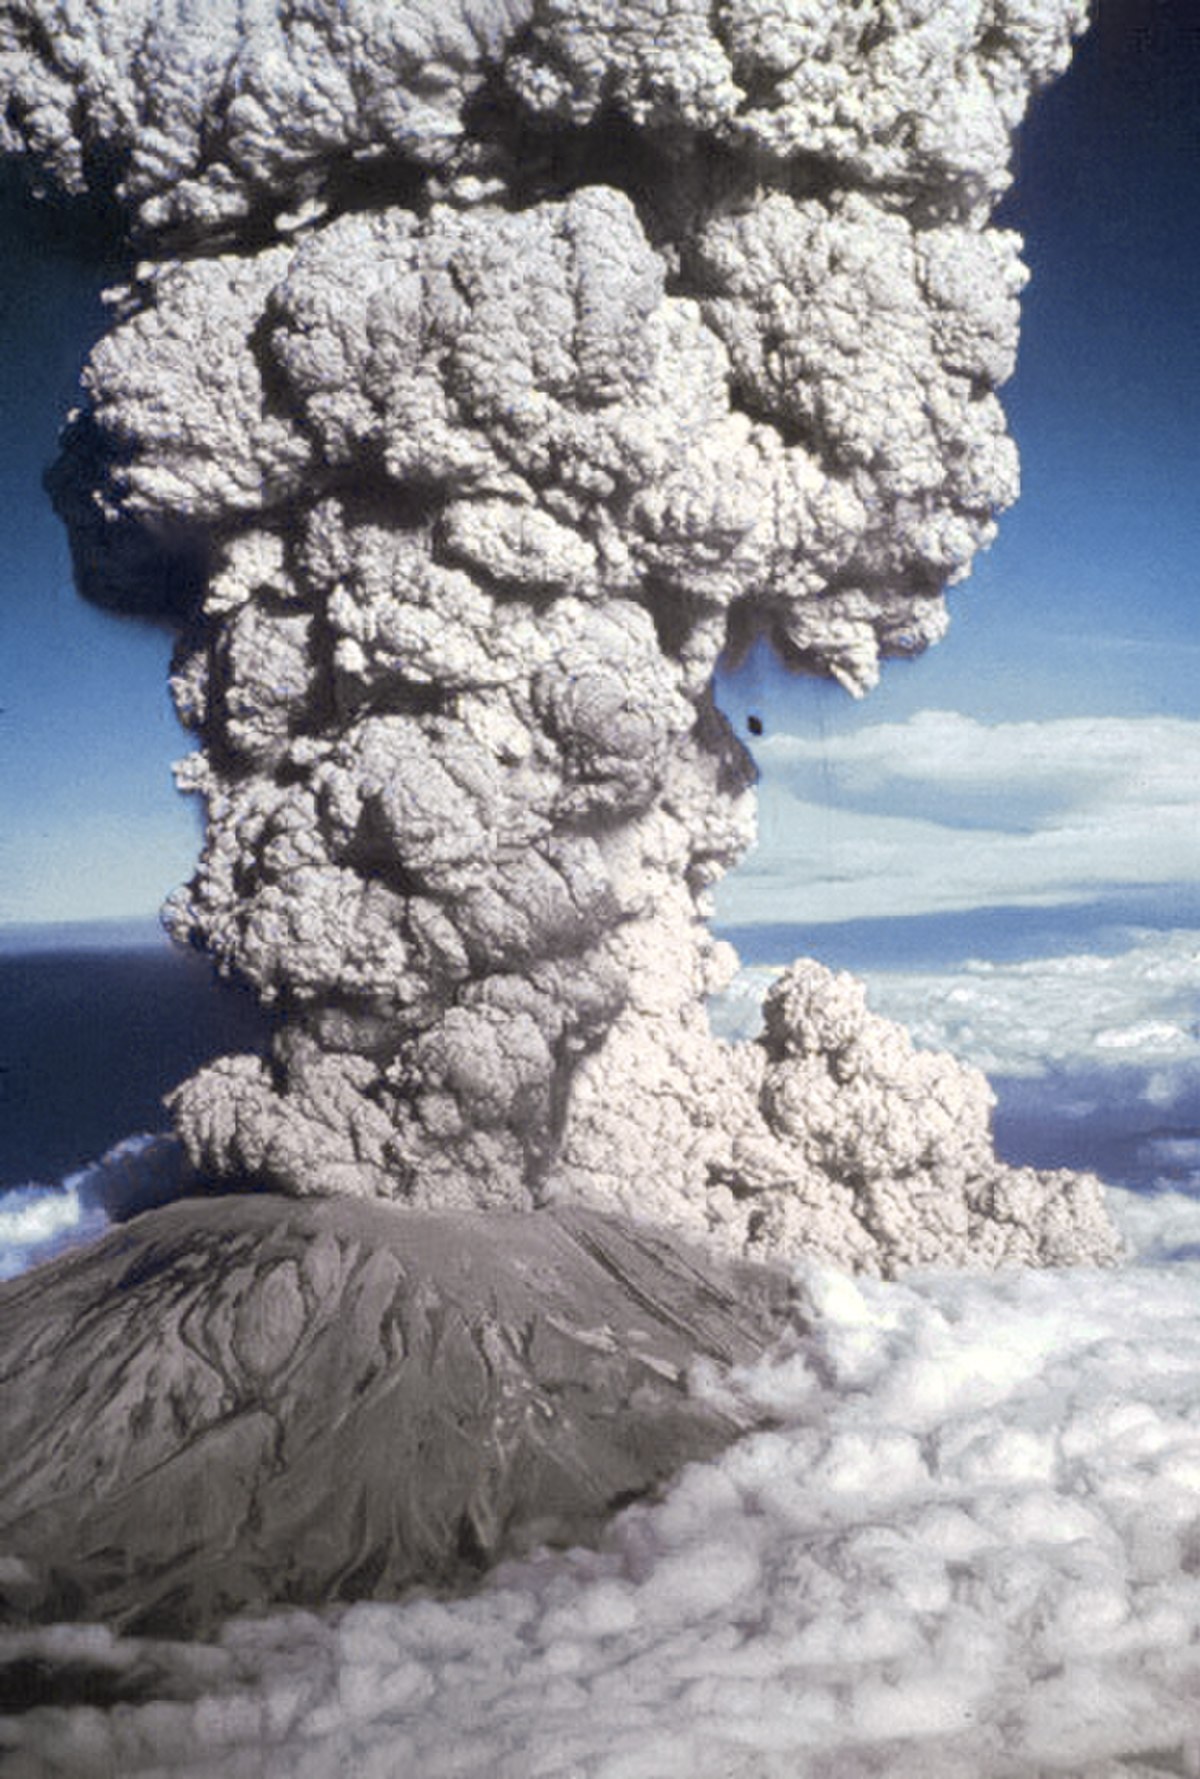 Eruption of Paektu Mountain